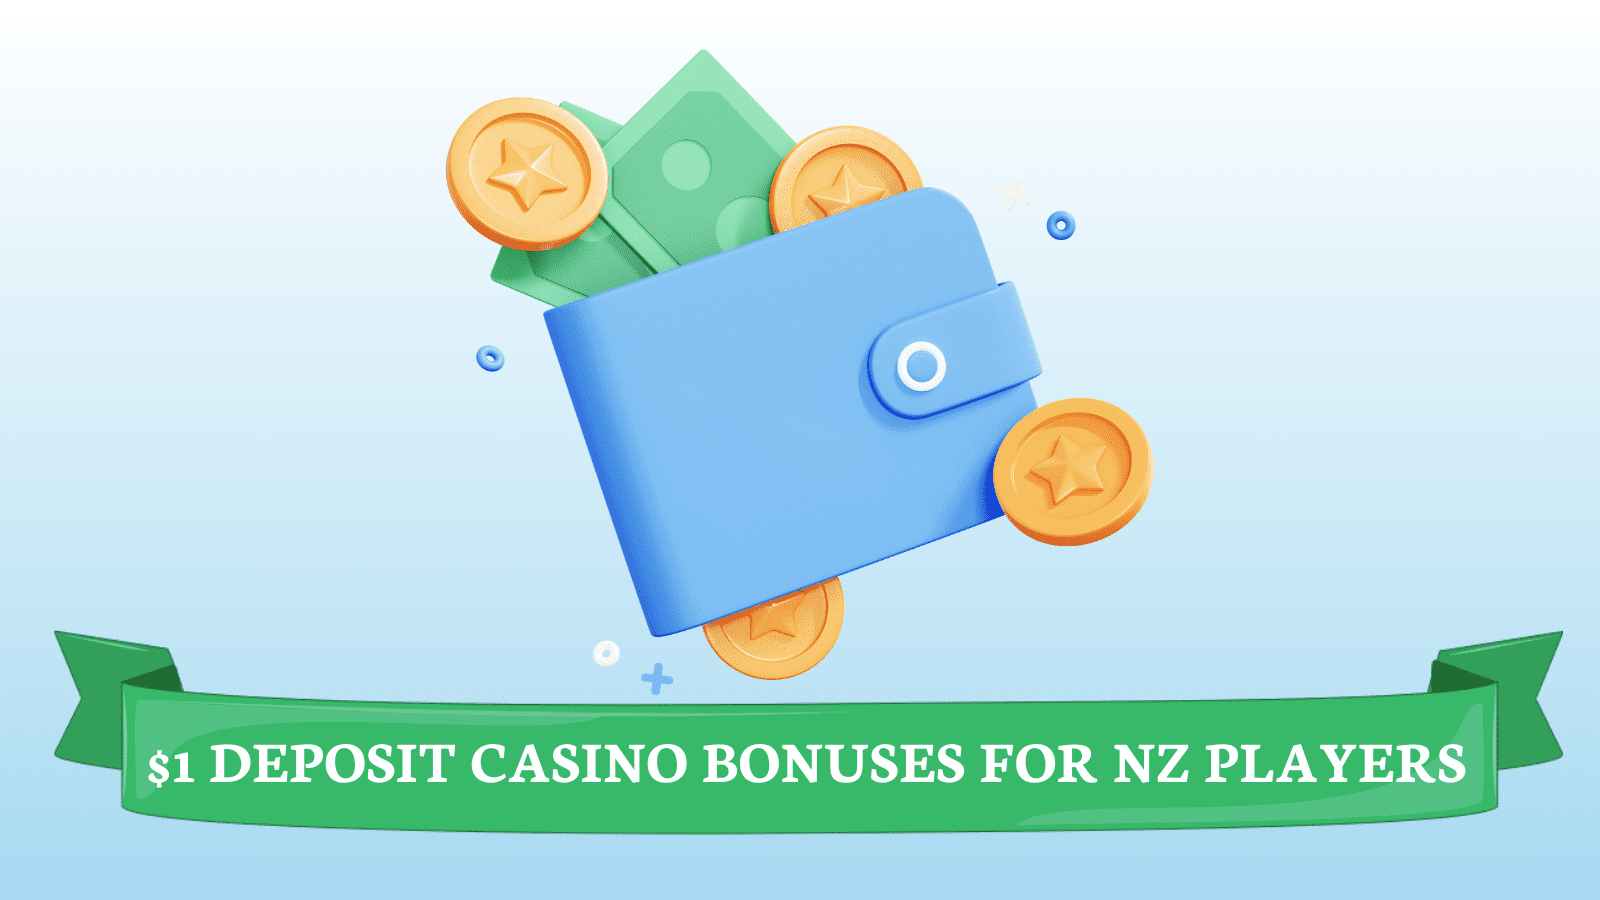 $1 deposit casino bonuses for NZ players